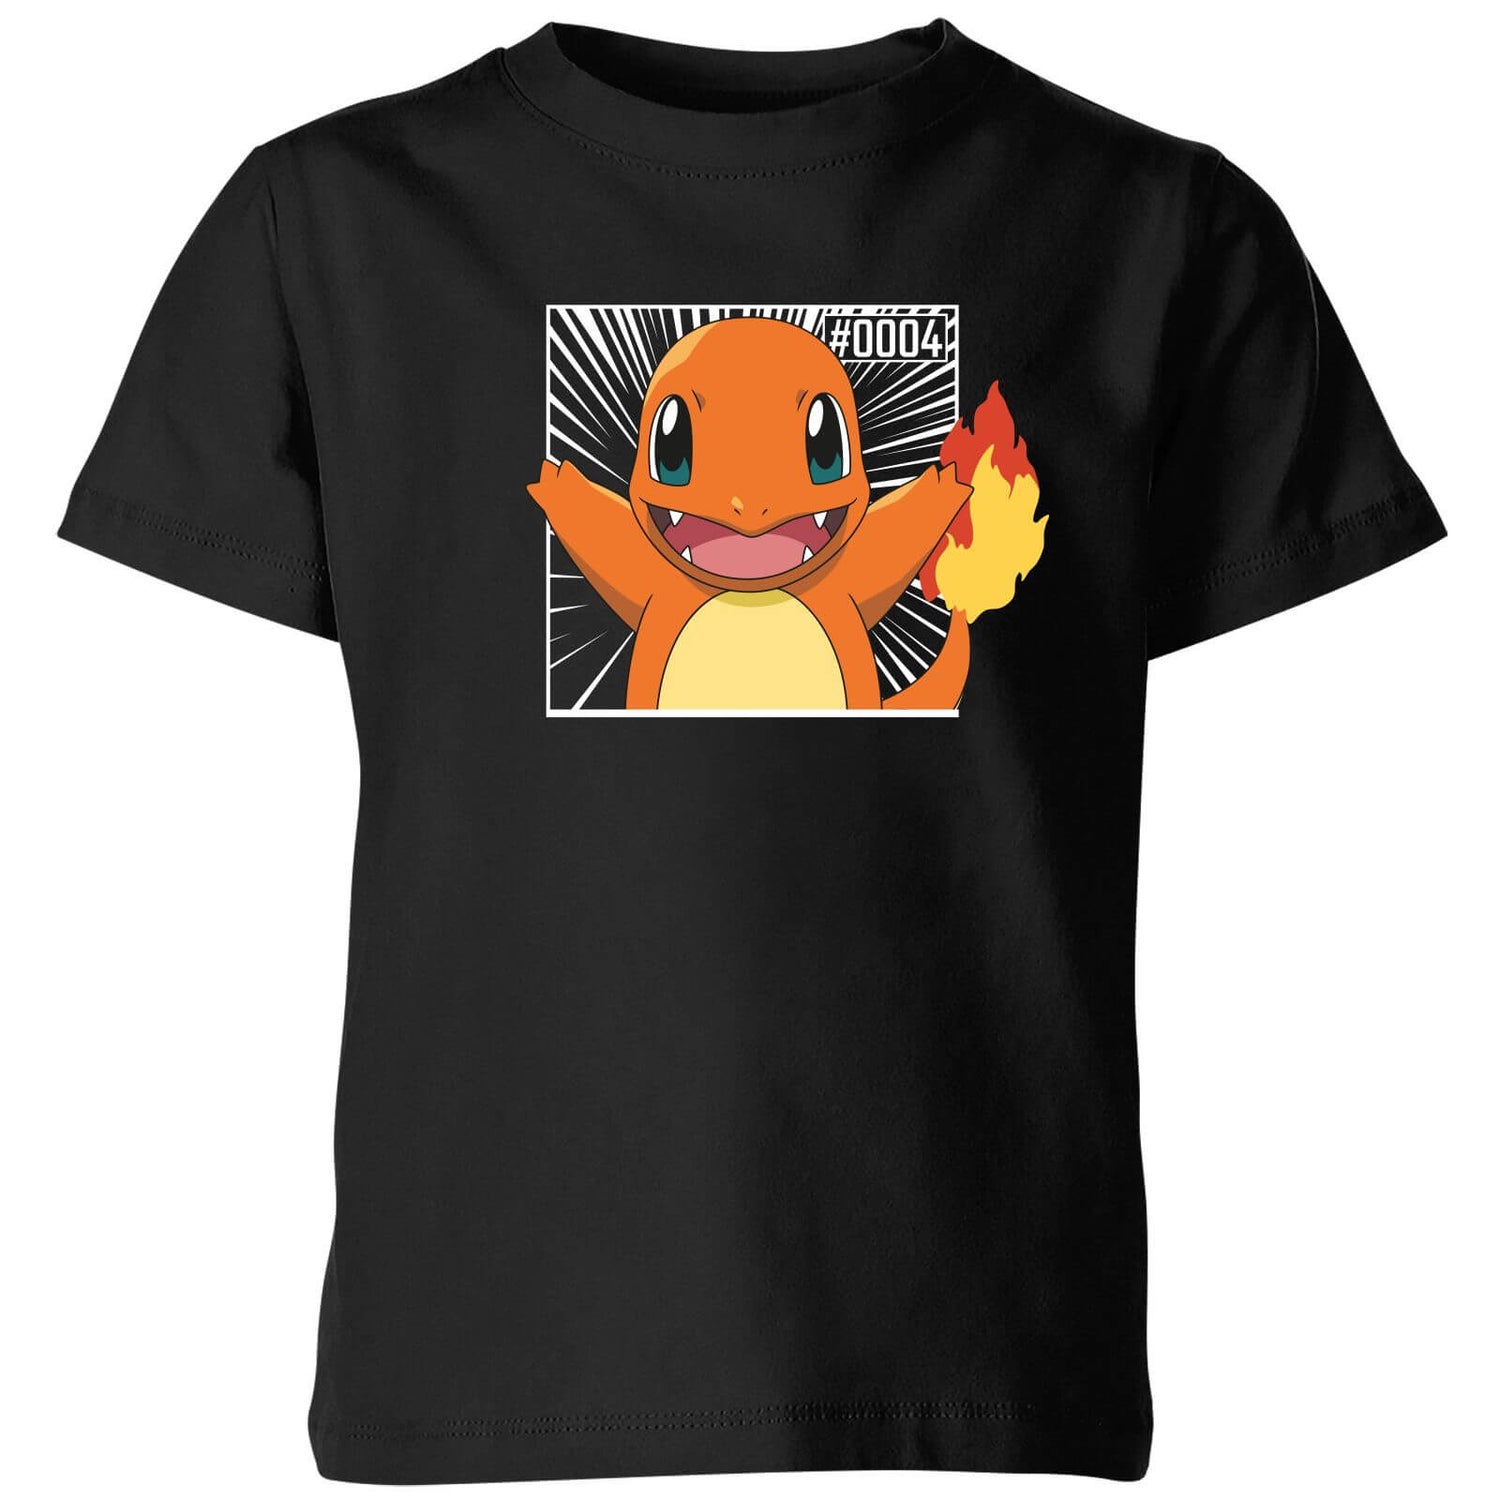 Pokémon Pokédex Charmander #0004 Kids' T-Shirt - Black